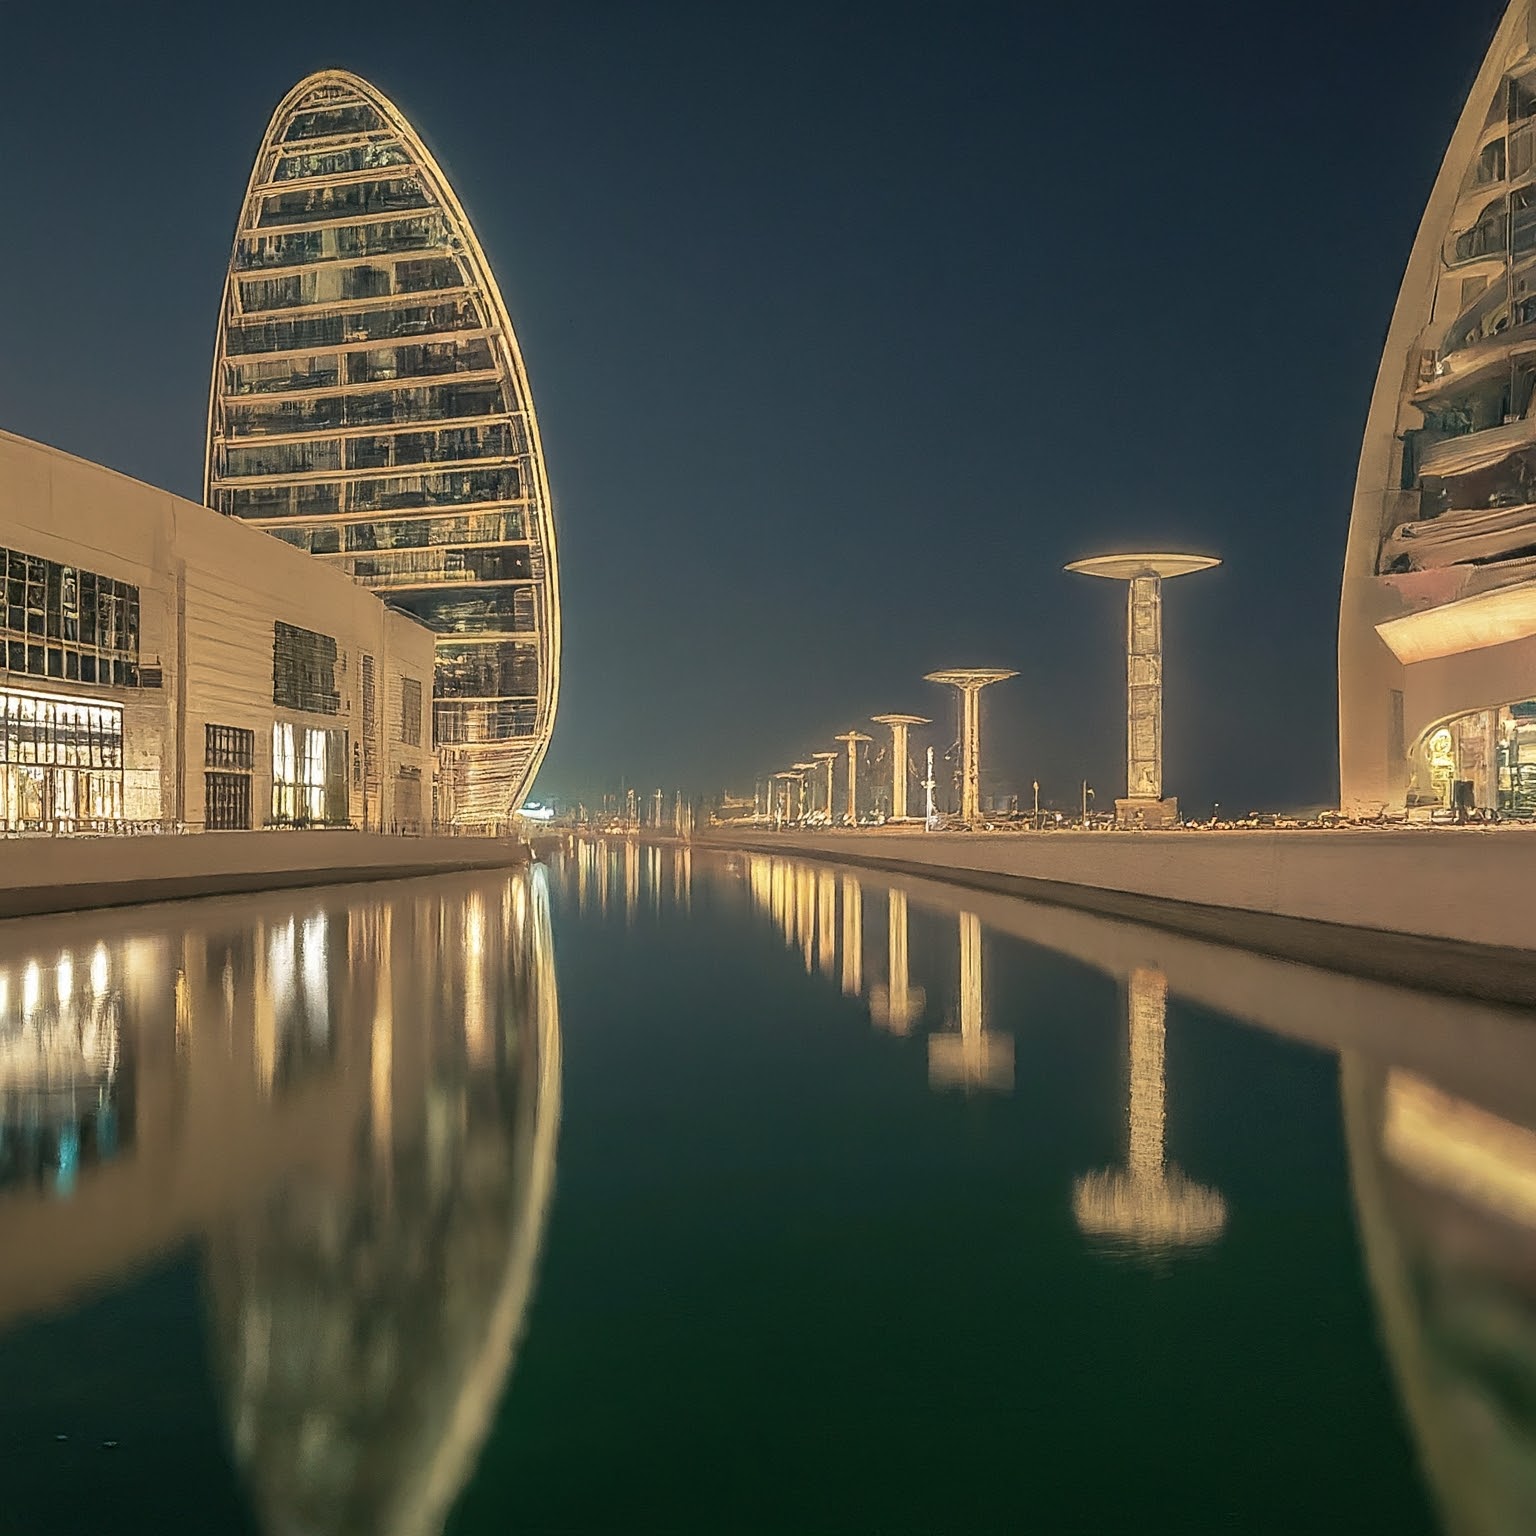 Lusail Boulevard, Doha, Qatar, nighttime scene with illuminated architecture.